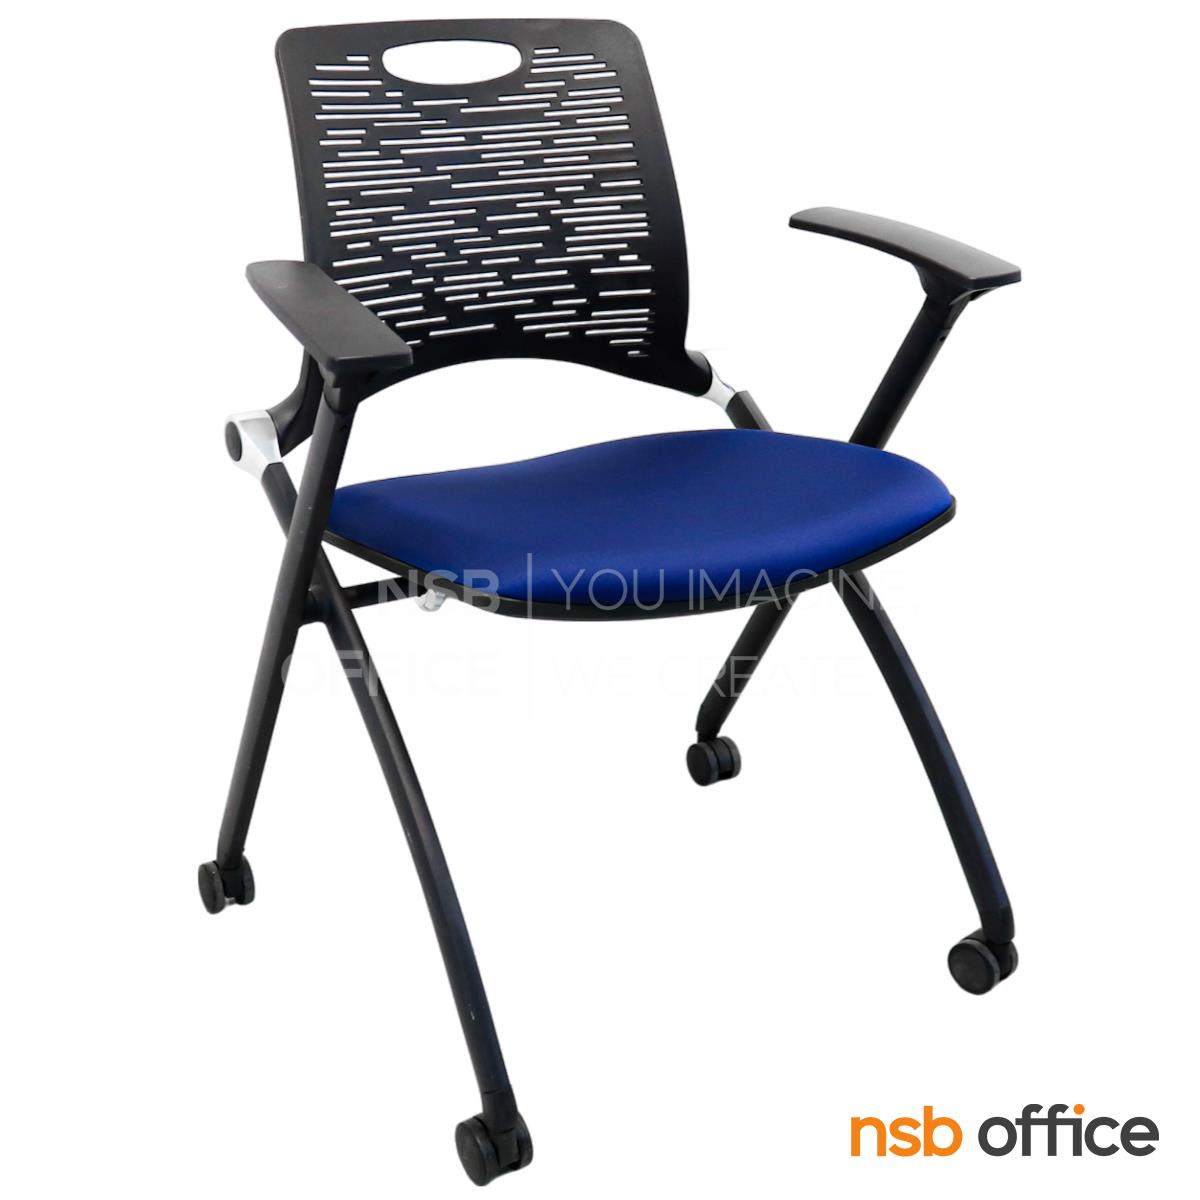 B05A184:เก้าอี้อเนกประสงค์โพลี่ล้อเลื่อน  รุ่น Legacy (เลกาซี่ย์)  ขาเหล็ก